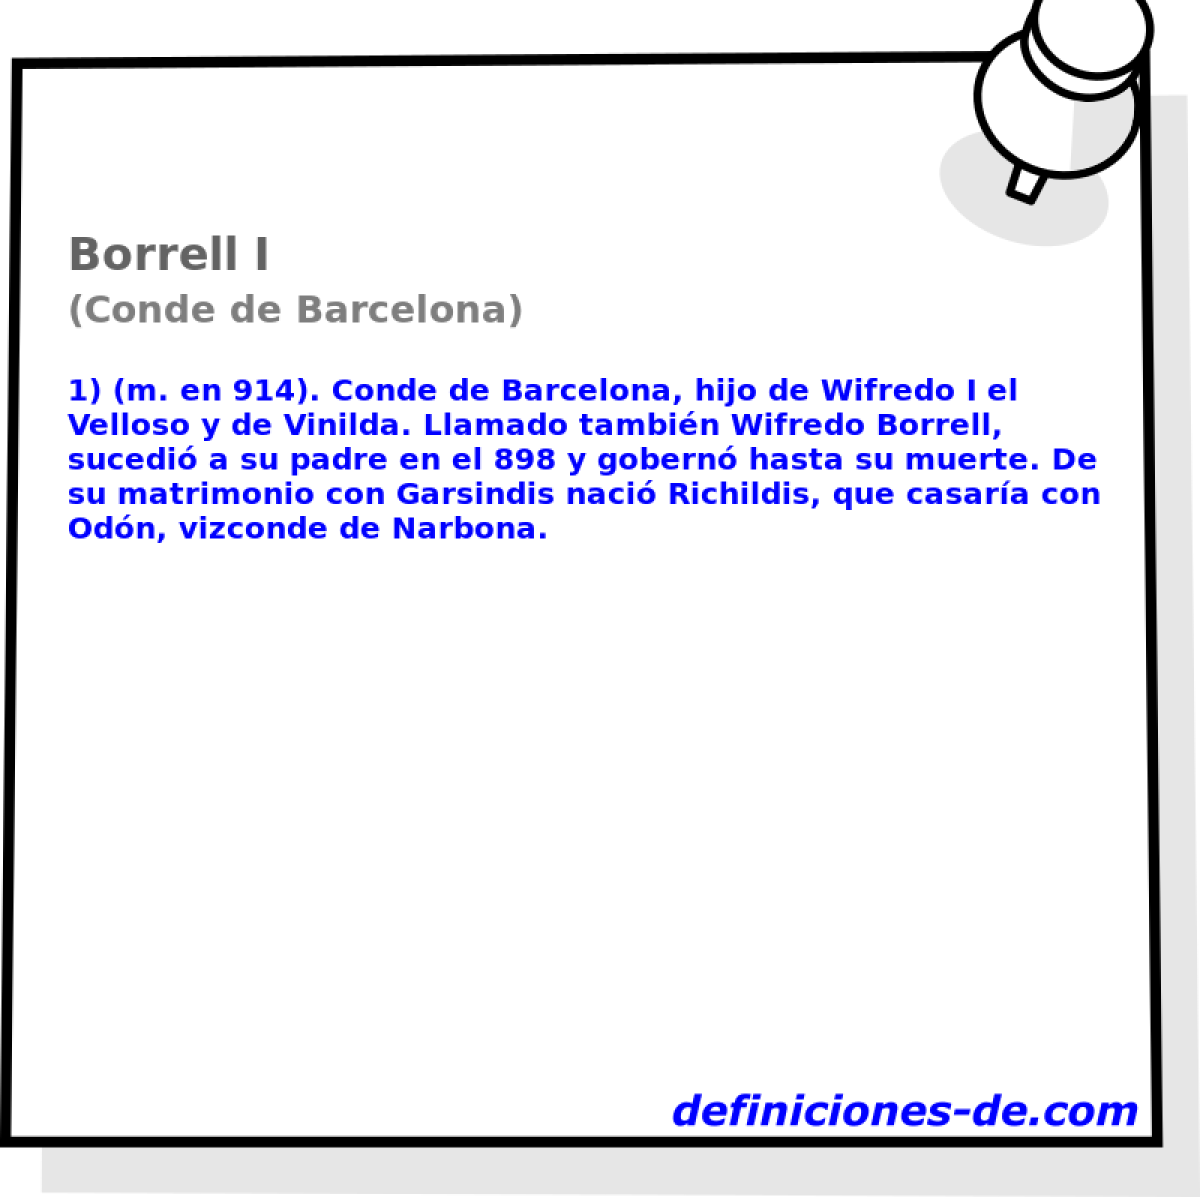 Borrell I (Conde de Barcelona)